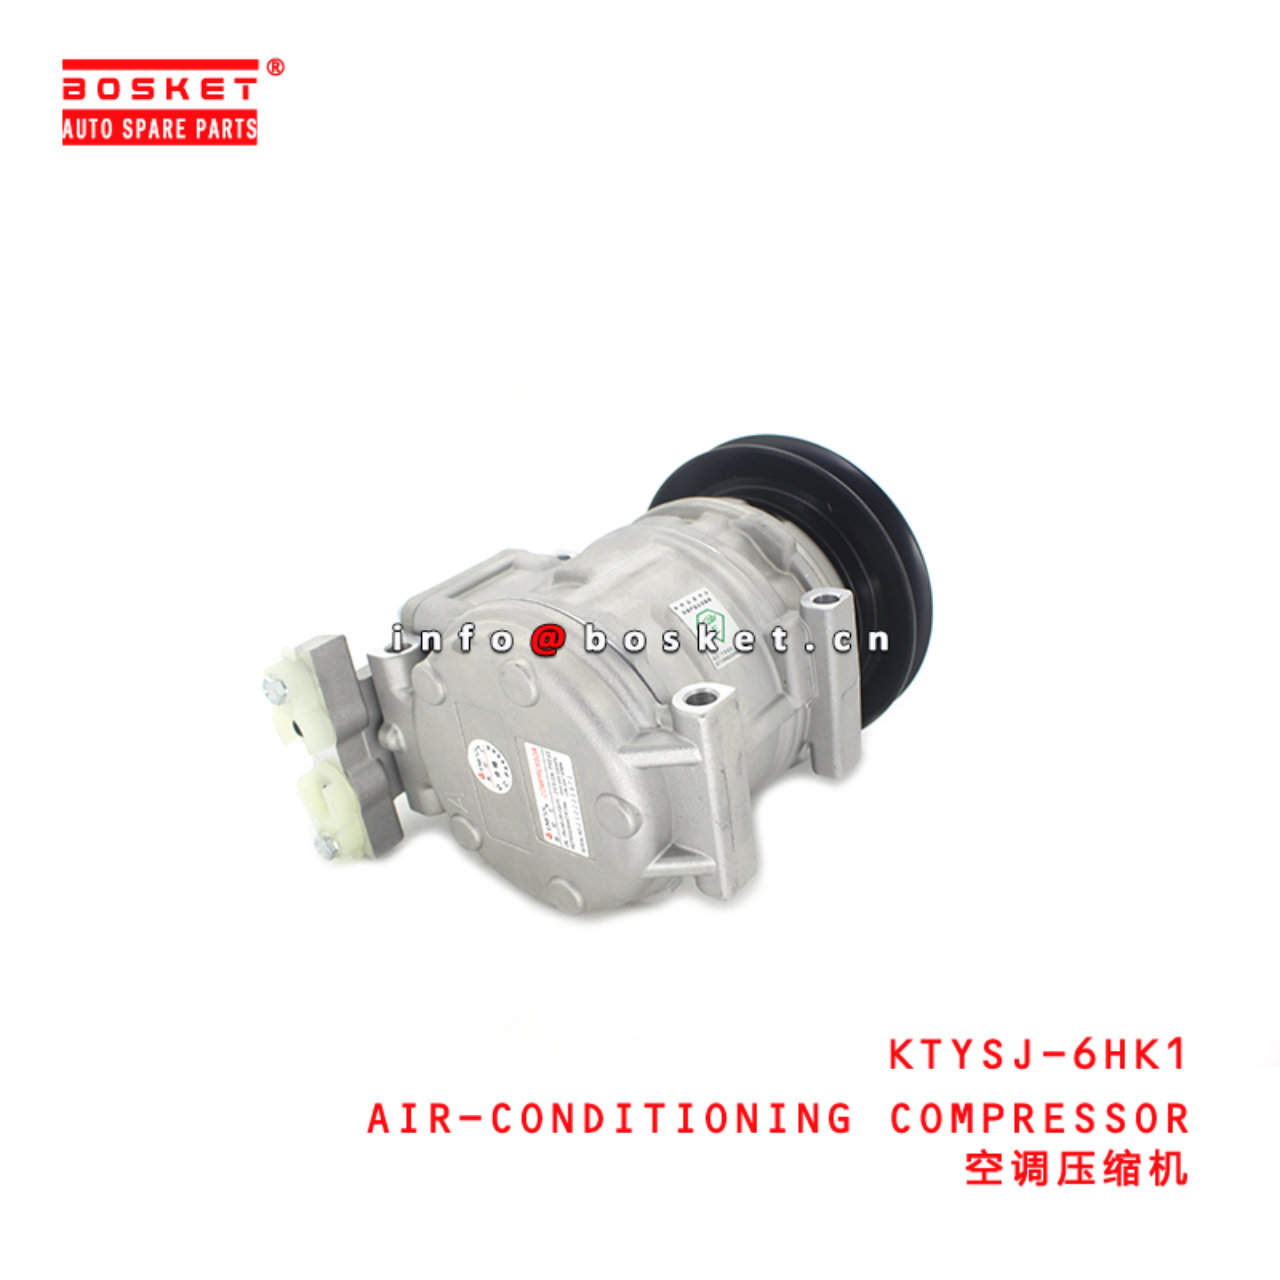 KTYSJ-6HK1 Air-Conditioning Compressor Suitable for ISUZU 6HK1